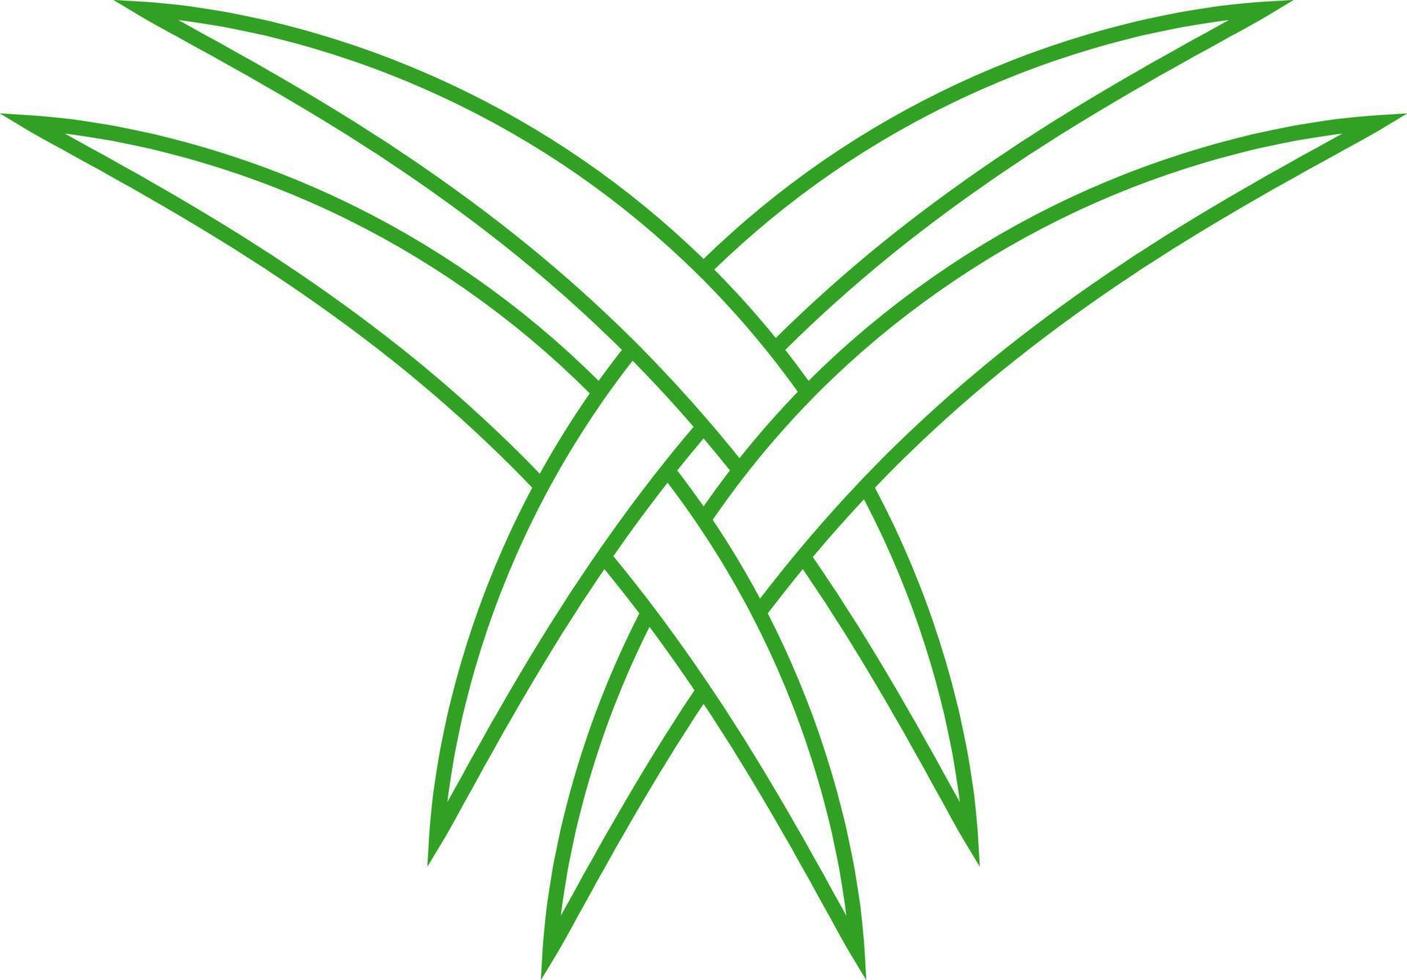 Intertwined palm leaves tourist logo Saudi Arabia vector